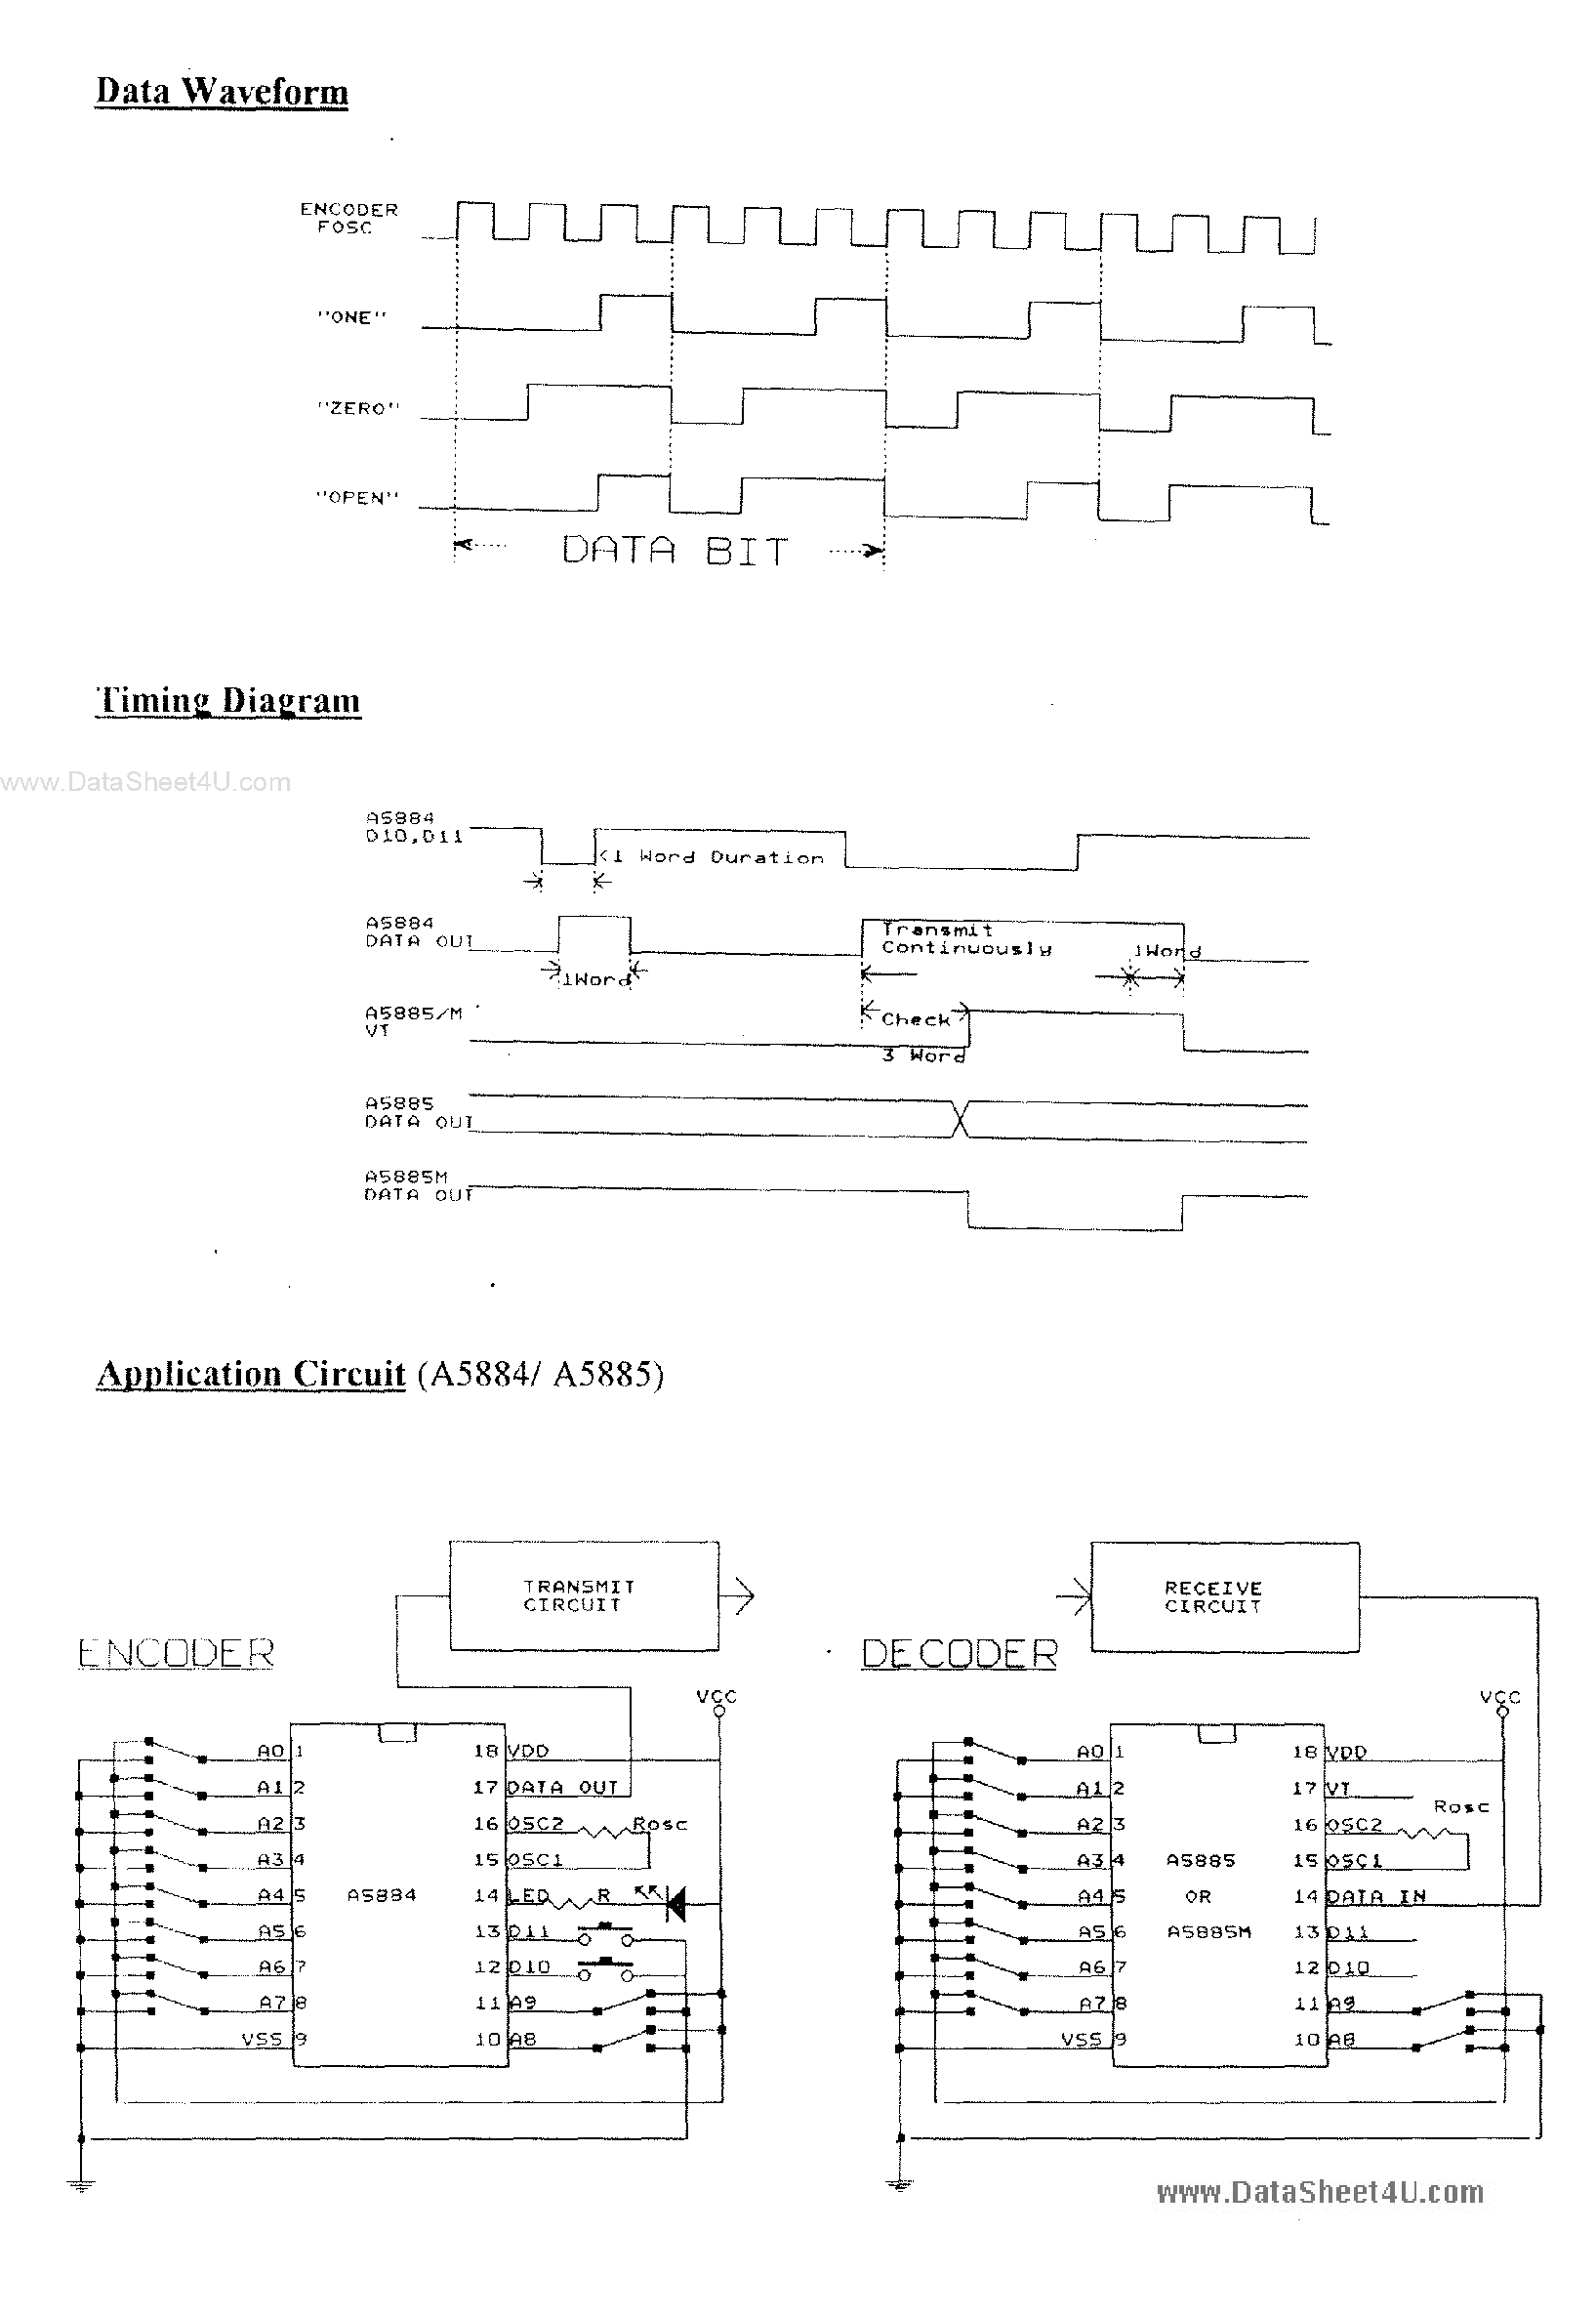 Datasheet A5882 - (A5882 - A5885) 3-State Encoder / Decoder page 2